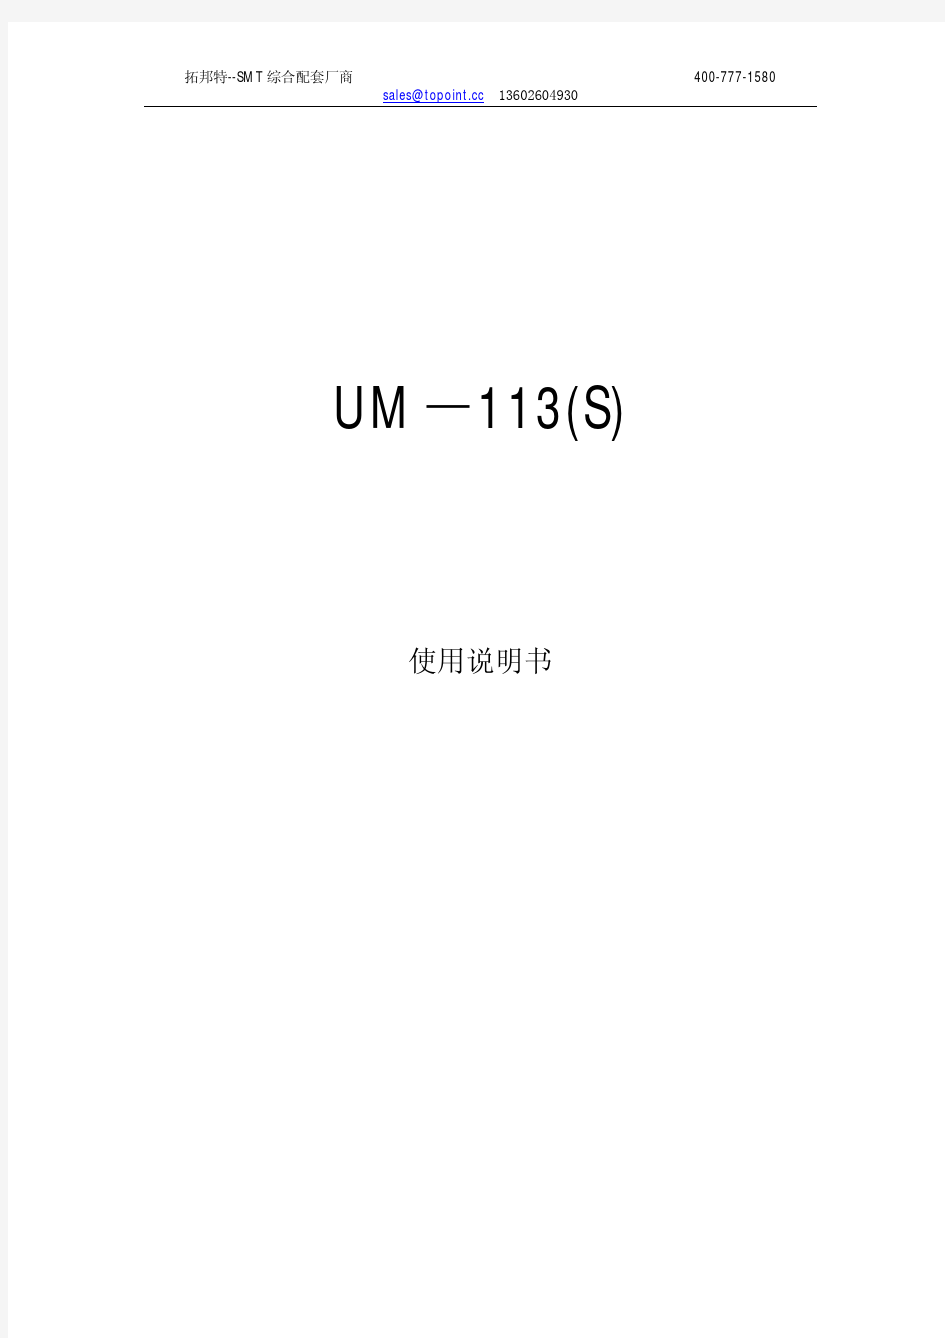 UM-113最新锡膏搅拌机使用说明书